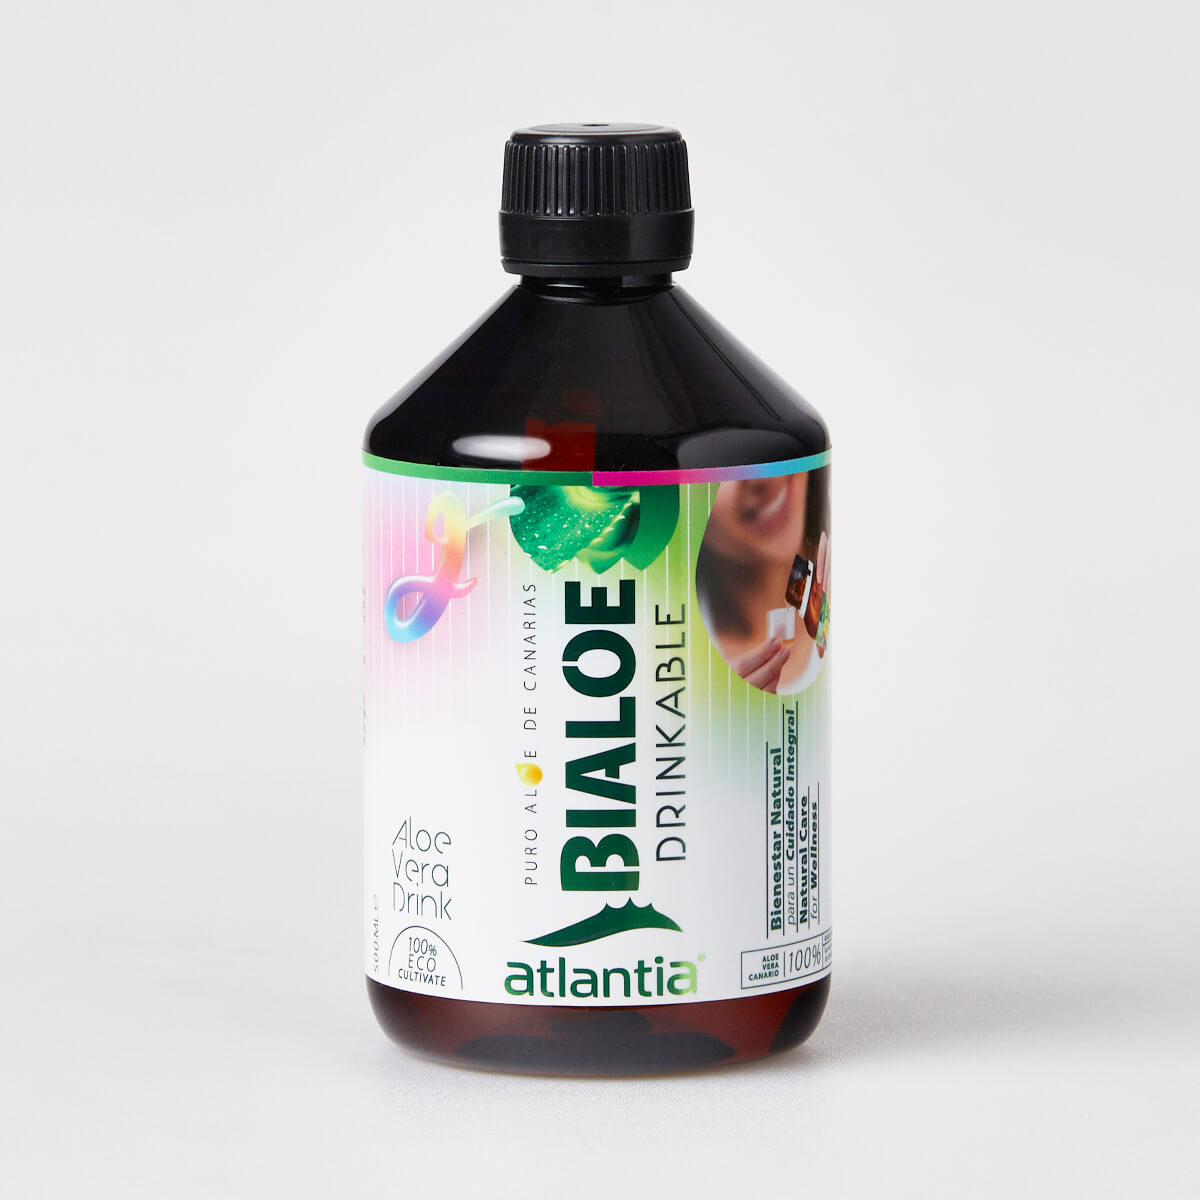 https://admin.atlantialoe.com/atlantiaadmin//img//productos/1/15/34/78-atlantia-aloe-vera-aloe-bebida-bialoe.jpg